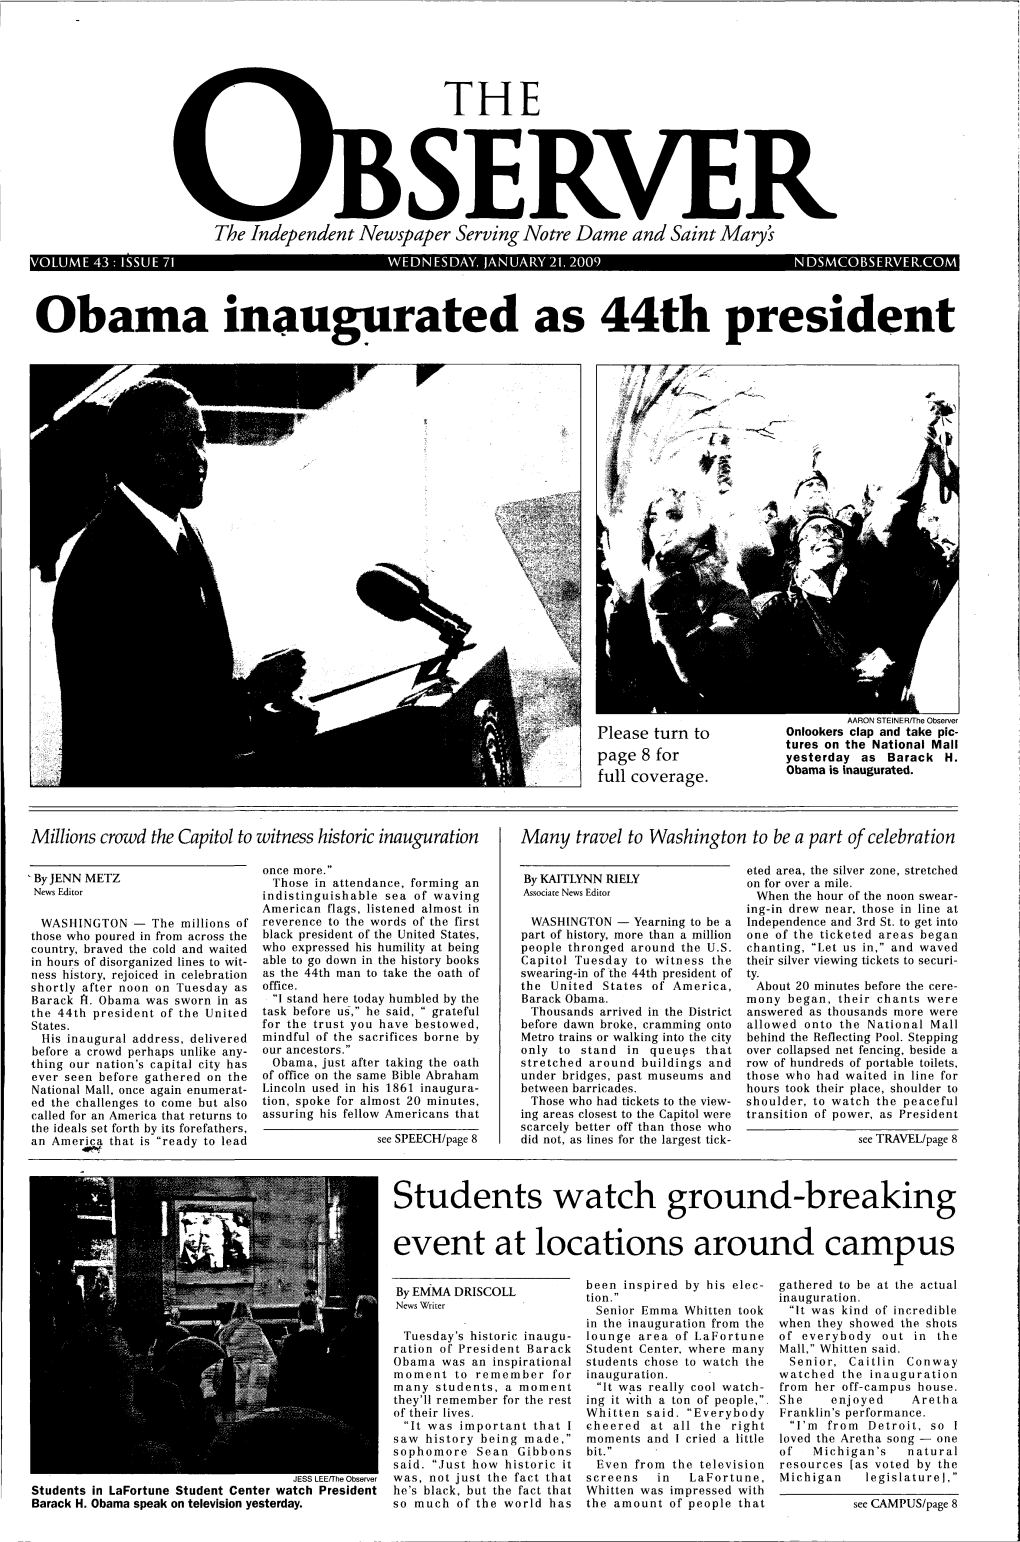 Obama Inau~Rated As 44Th President